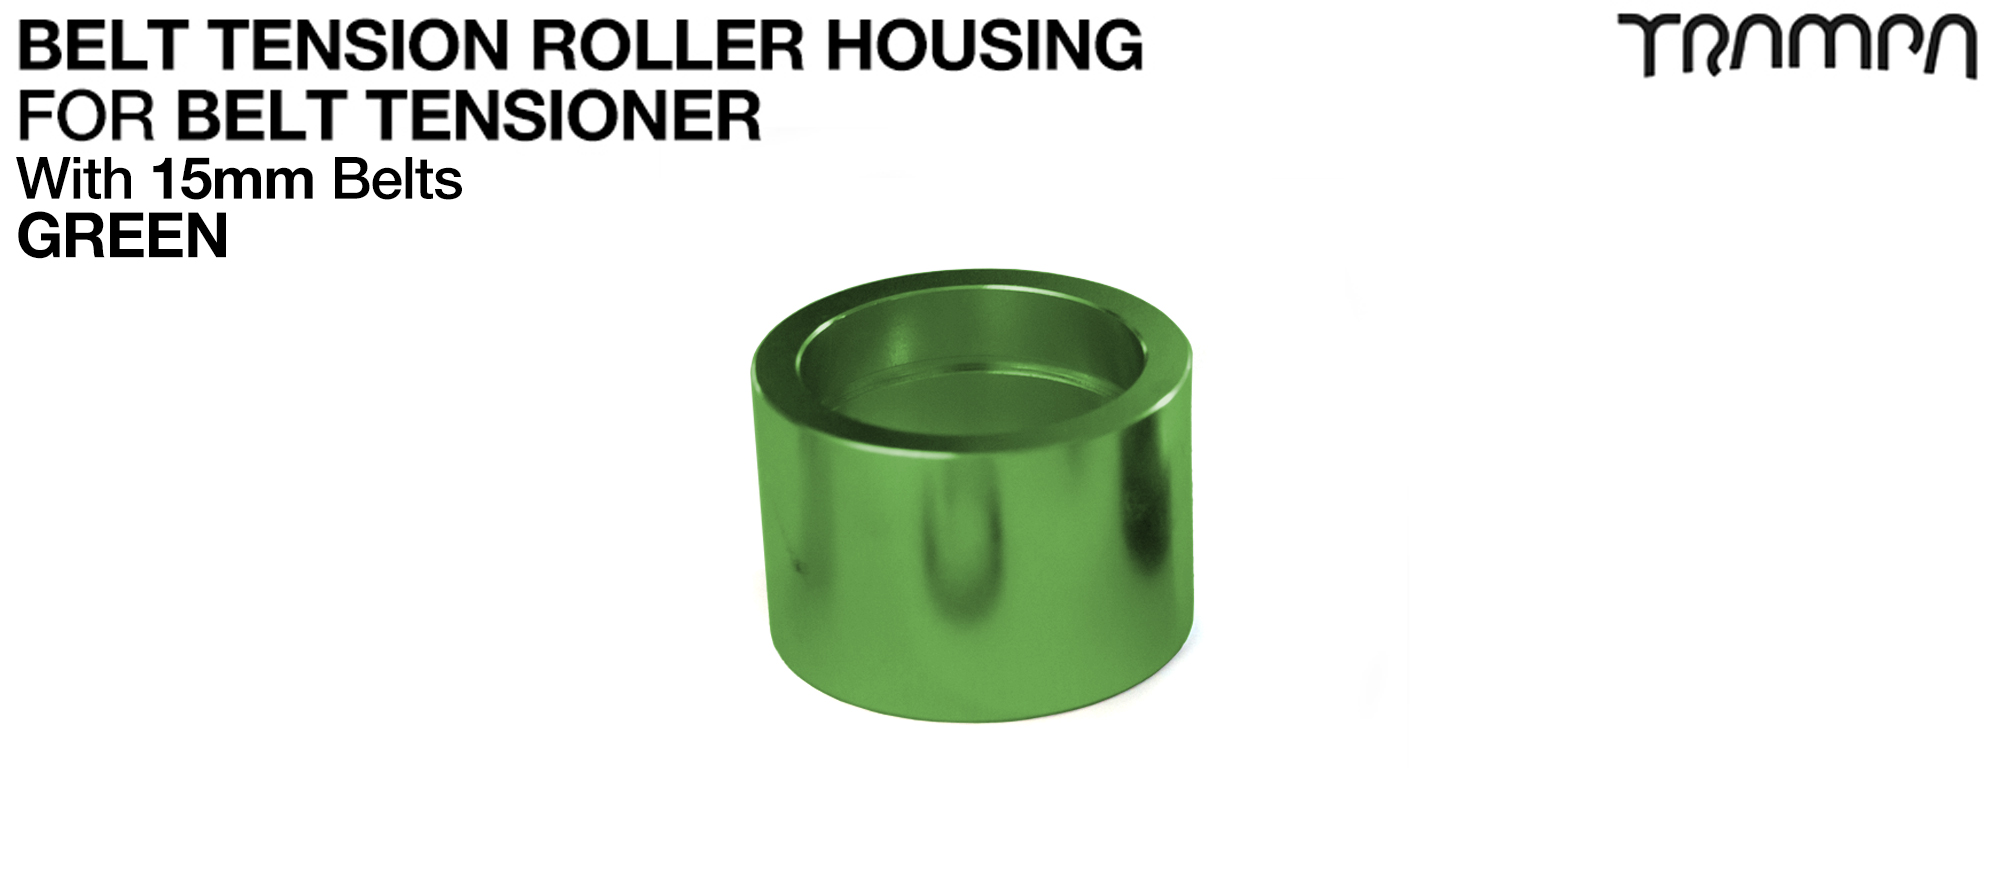 Belt Tension Roller Housing for 15mm Belts - GREEN